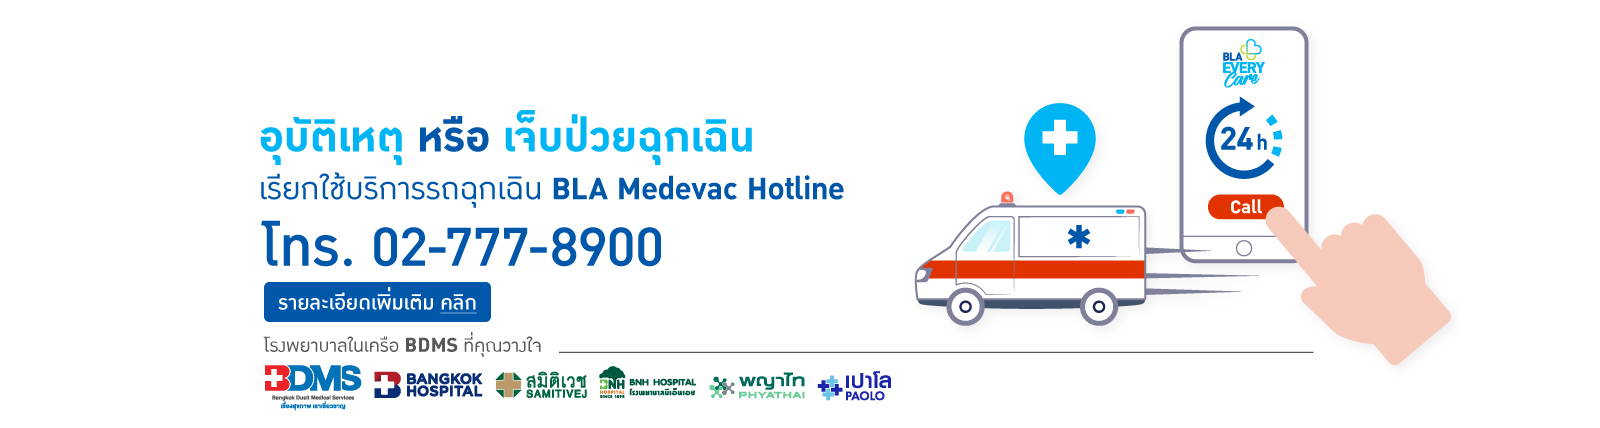 BLA Medevac Hotline